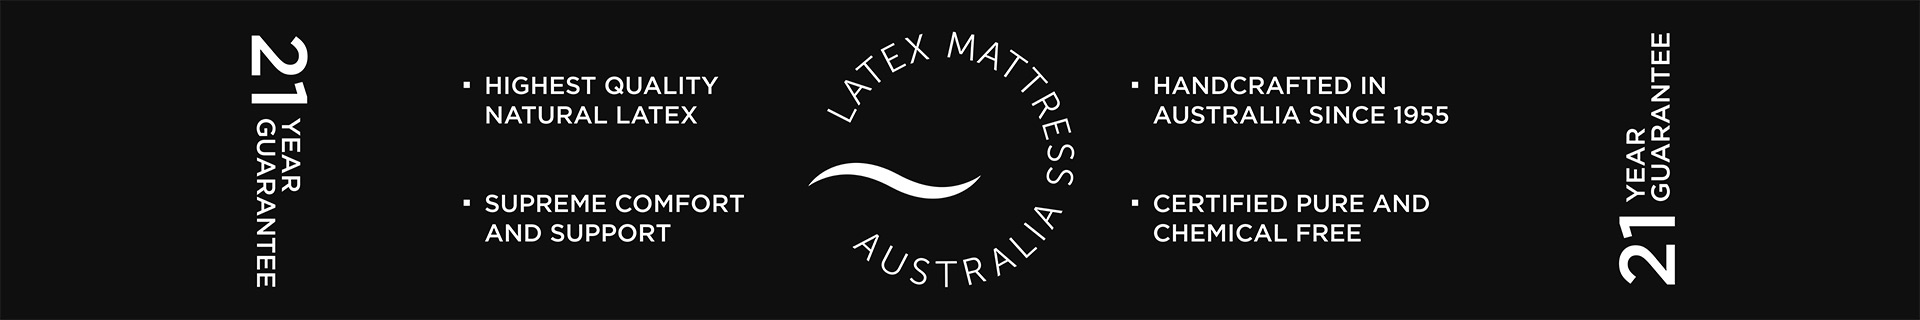 Latex Mattress Australia Foot Protector Artwork